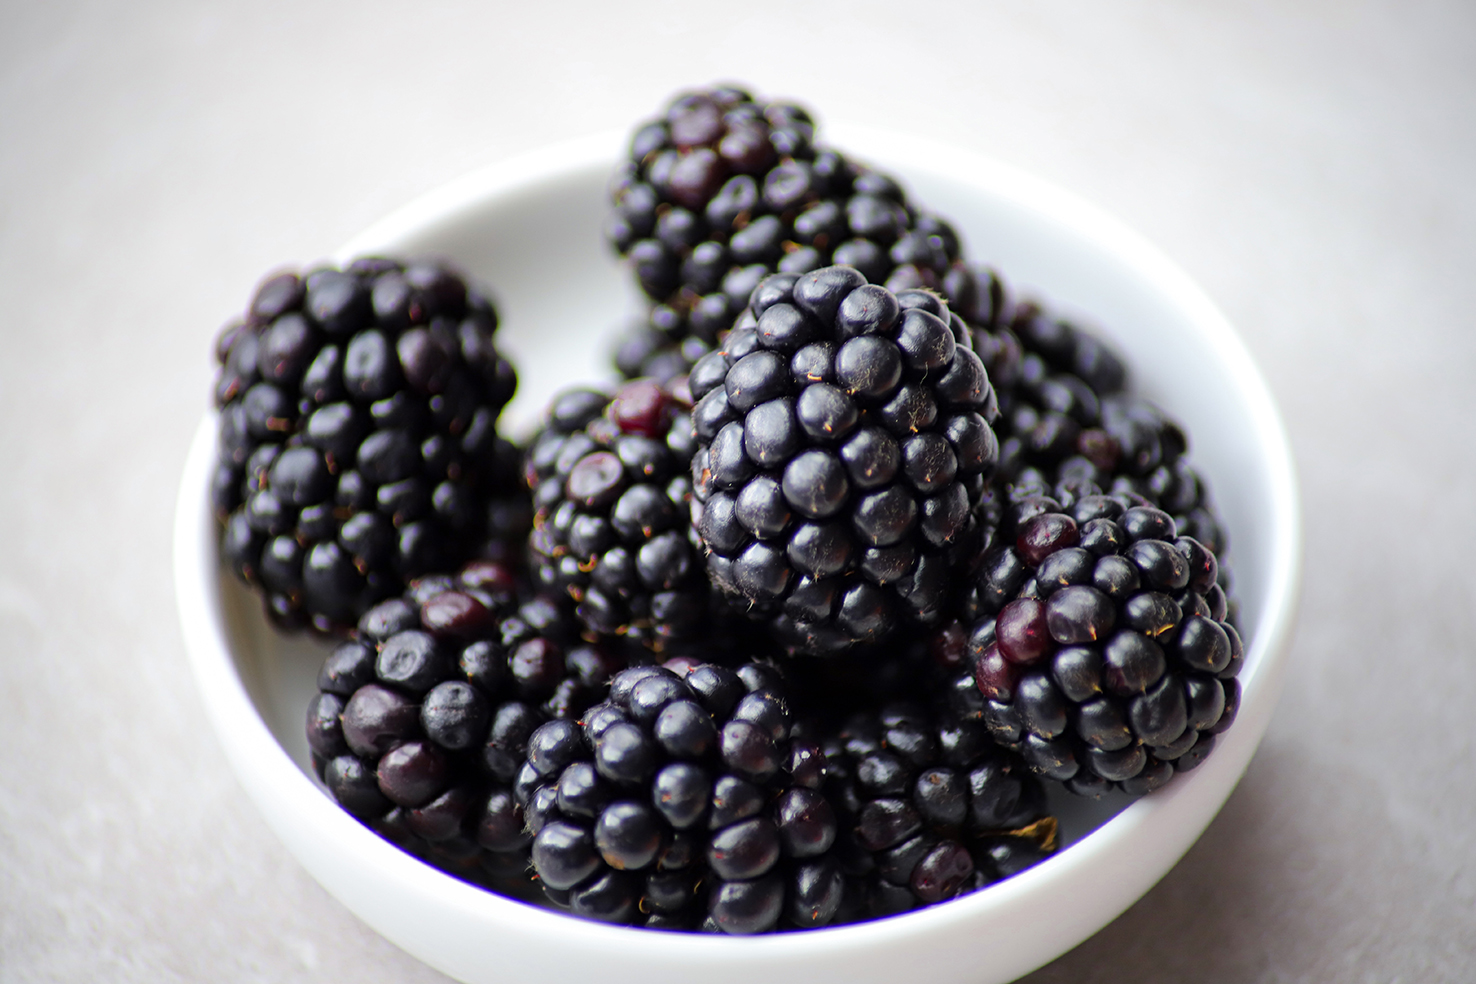 Dish of blackberries